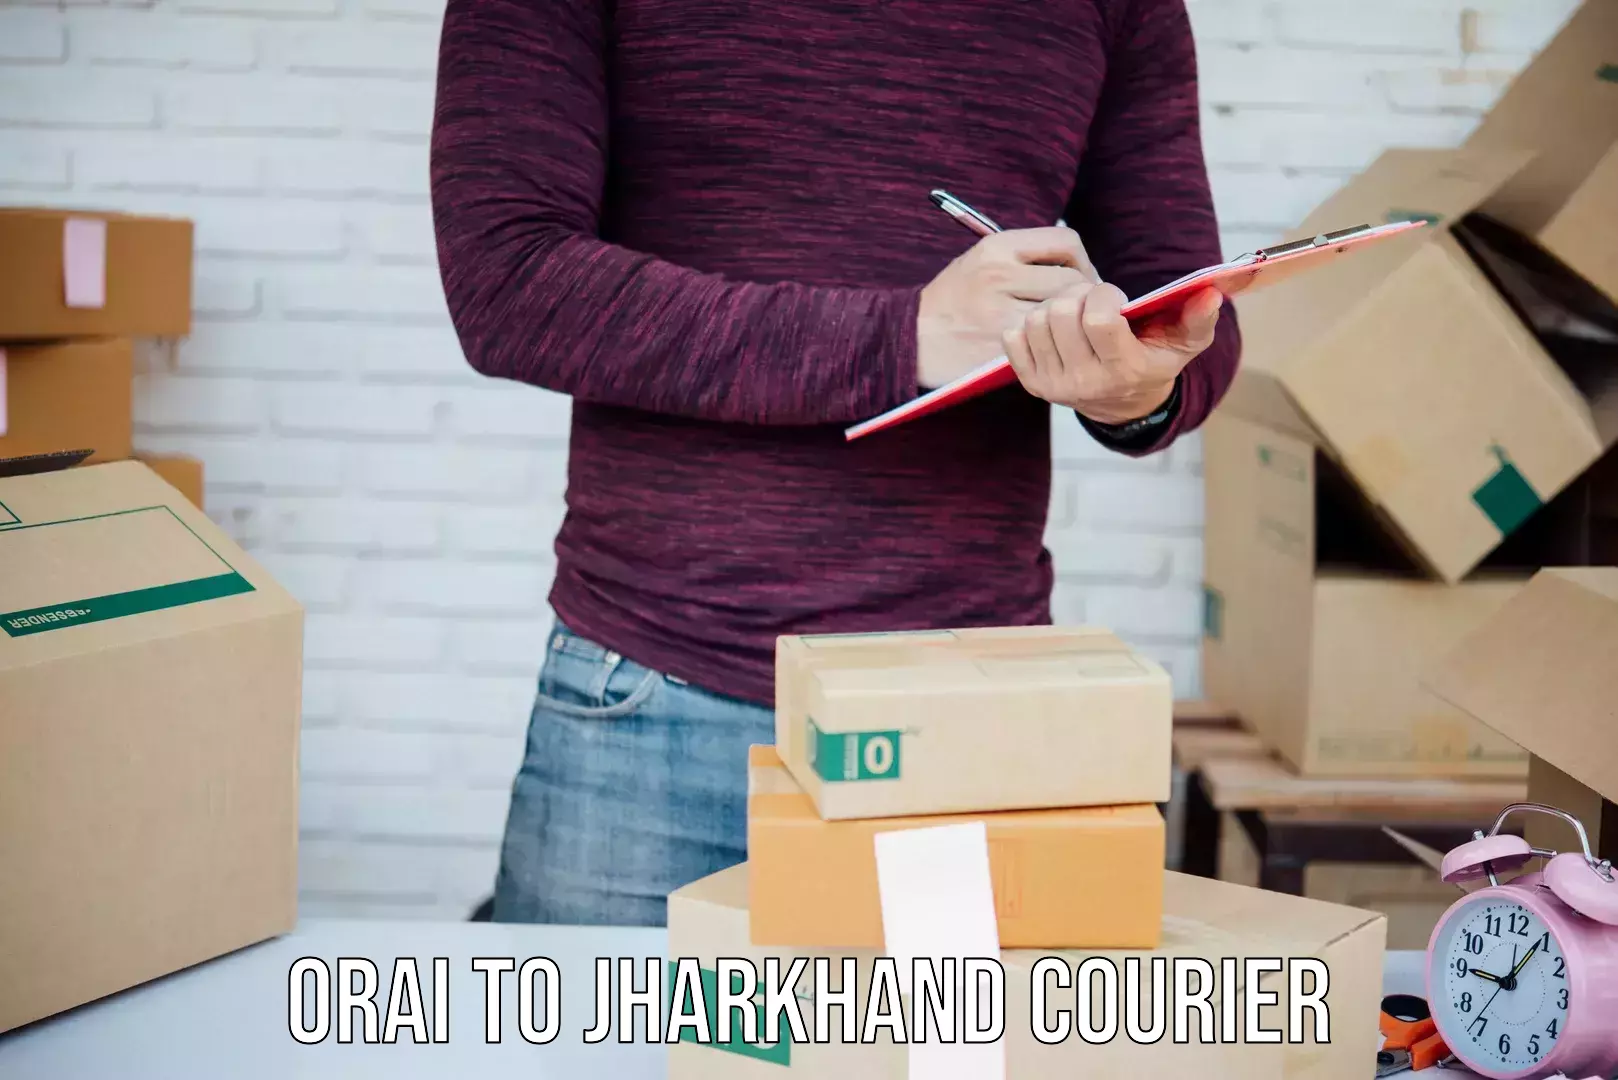 Courier service comparison in Orai to Bundu